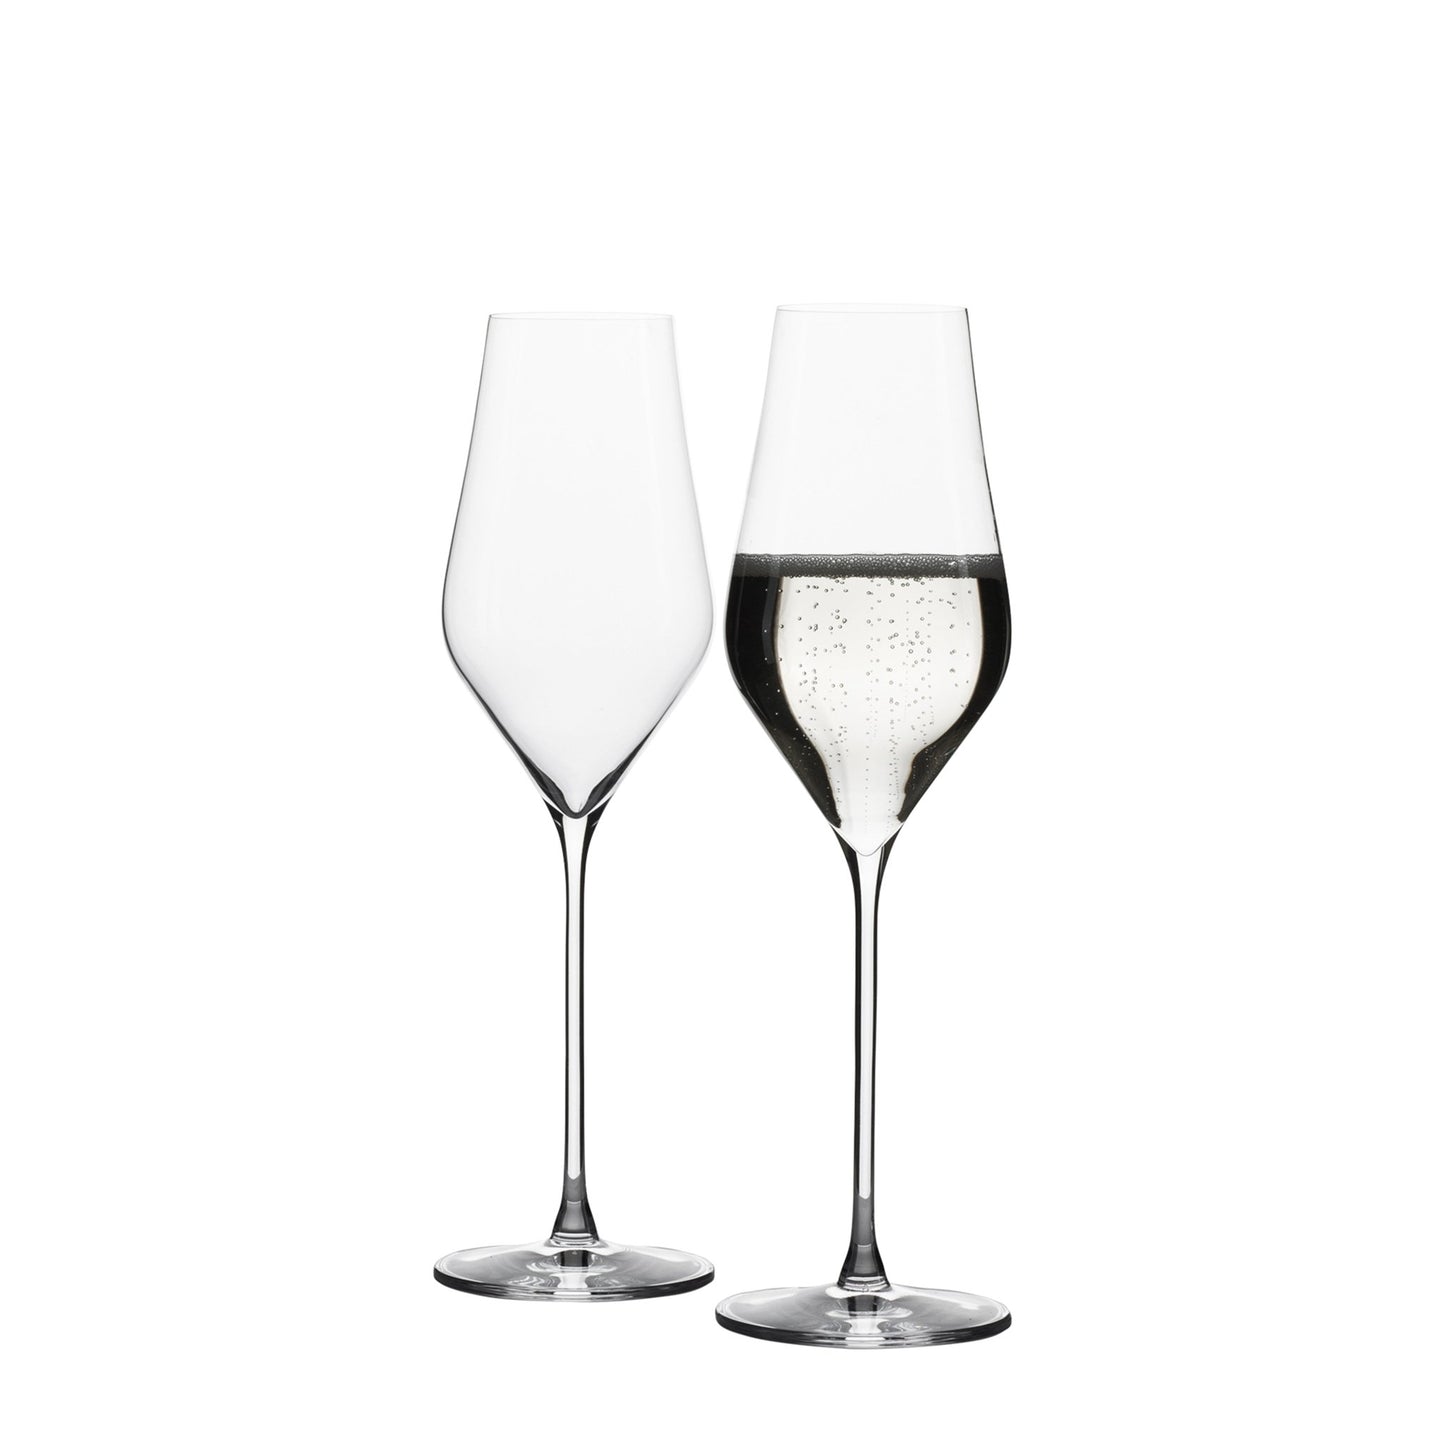 DUKE Champagne Flute Glasses. Set of 4 Glasses (310ml / 10.5oz) - Anders & White